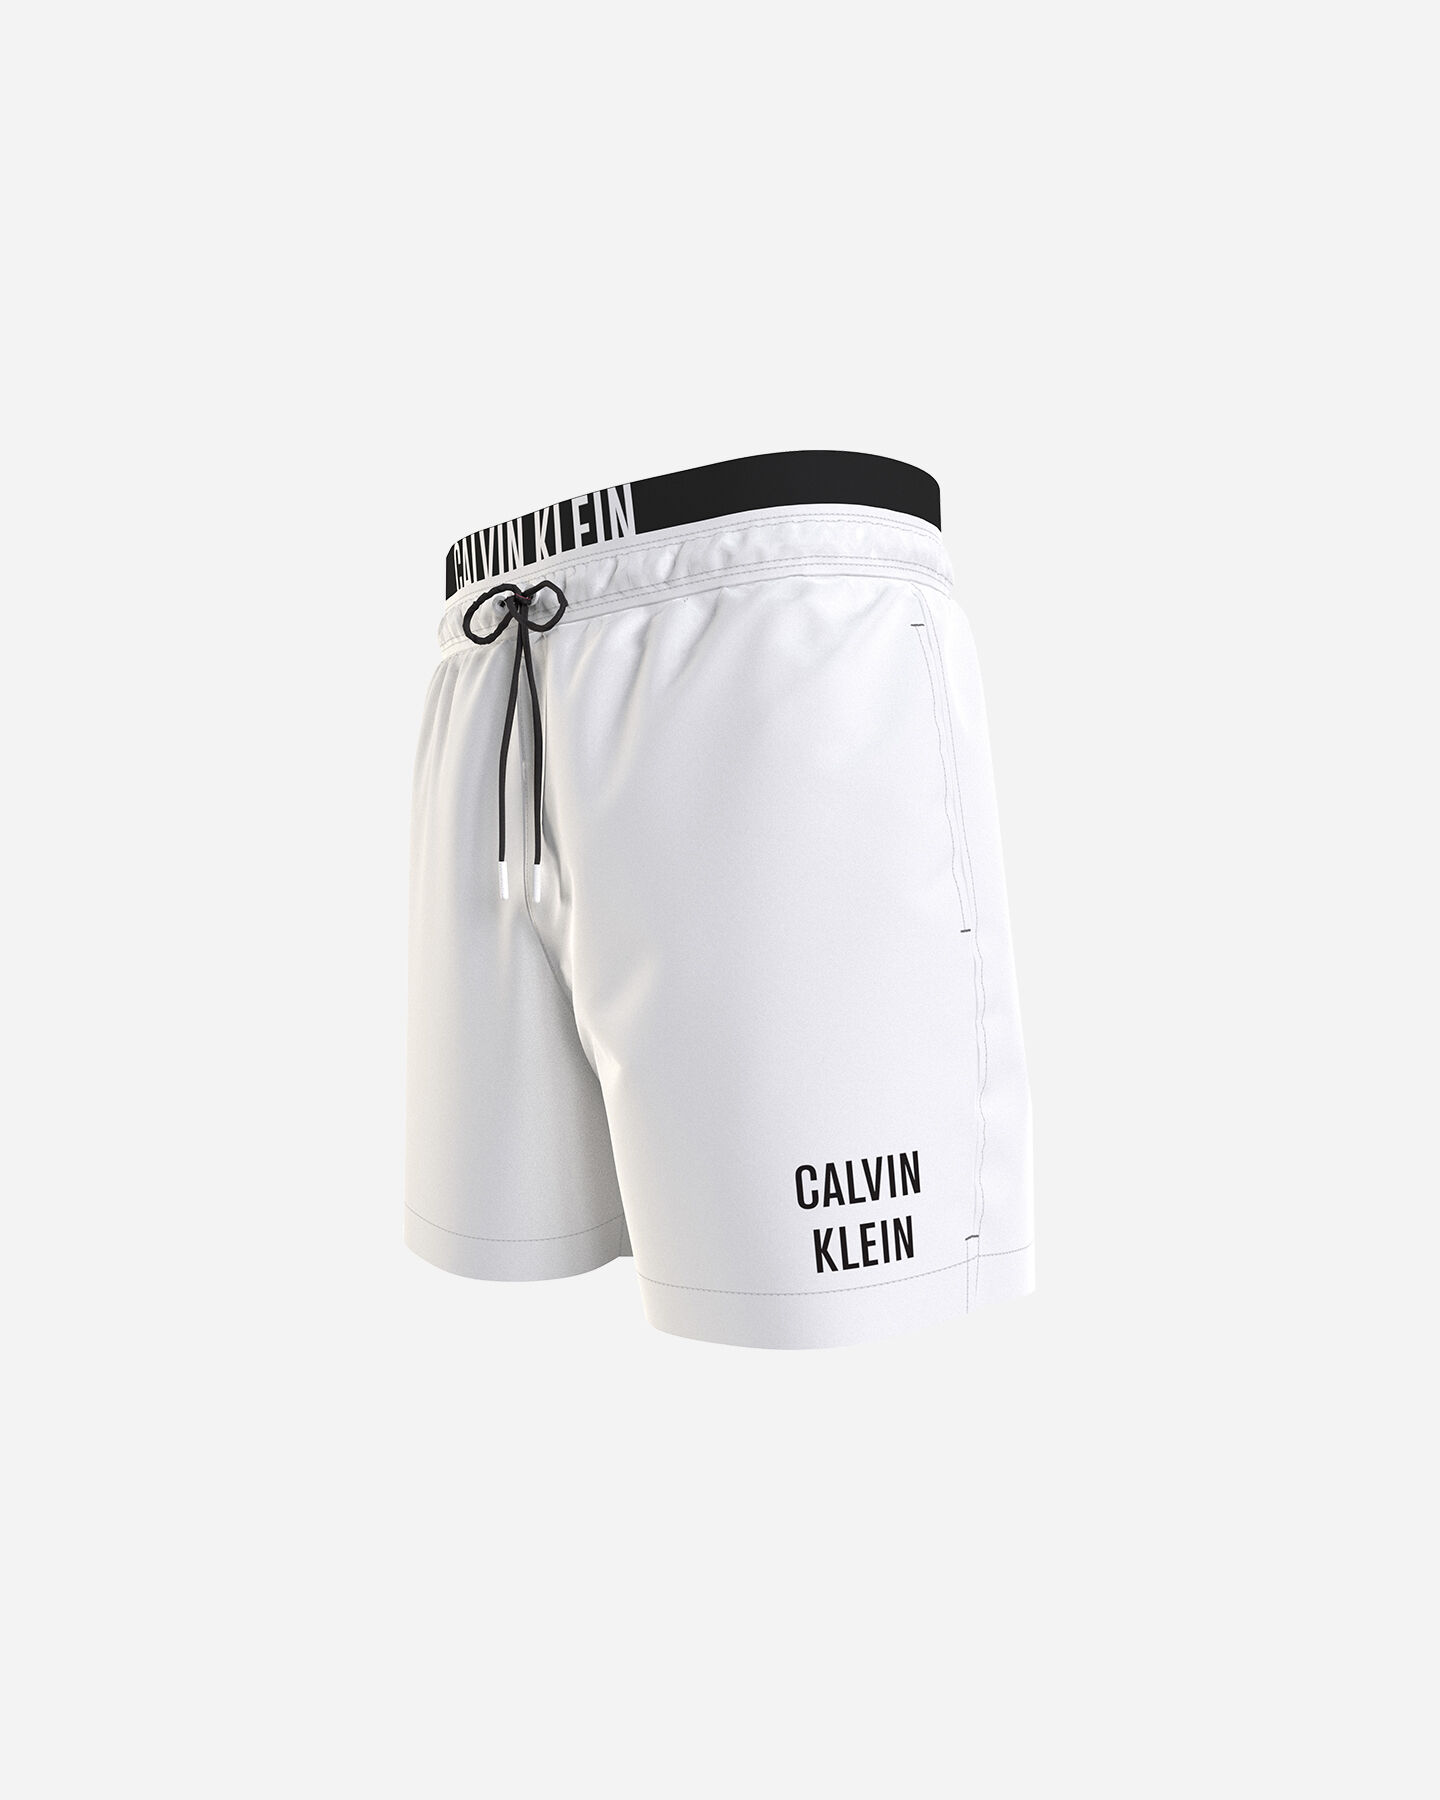  Boxer mare CALVIN KLEIN JEANS ELASTIC M S4125878|YCD|S scatto 1